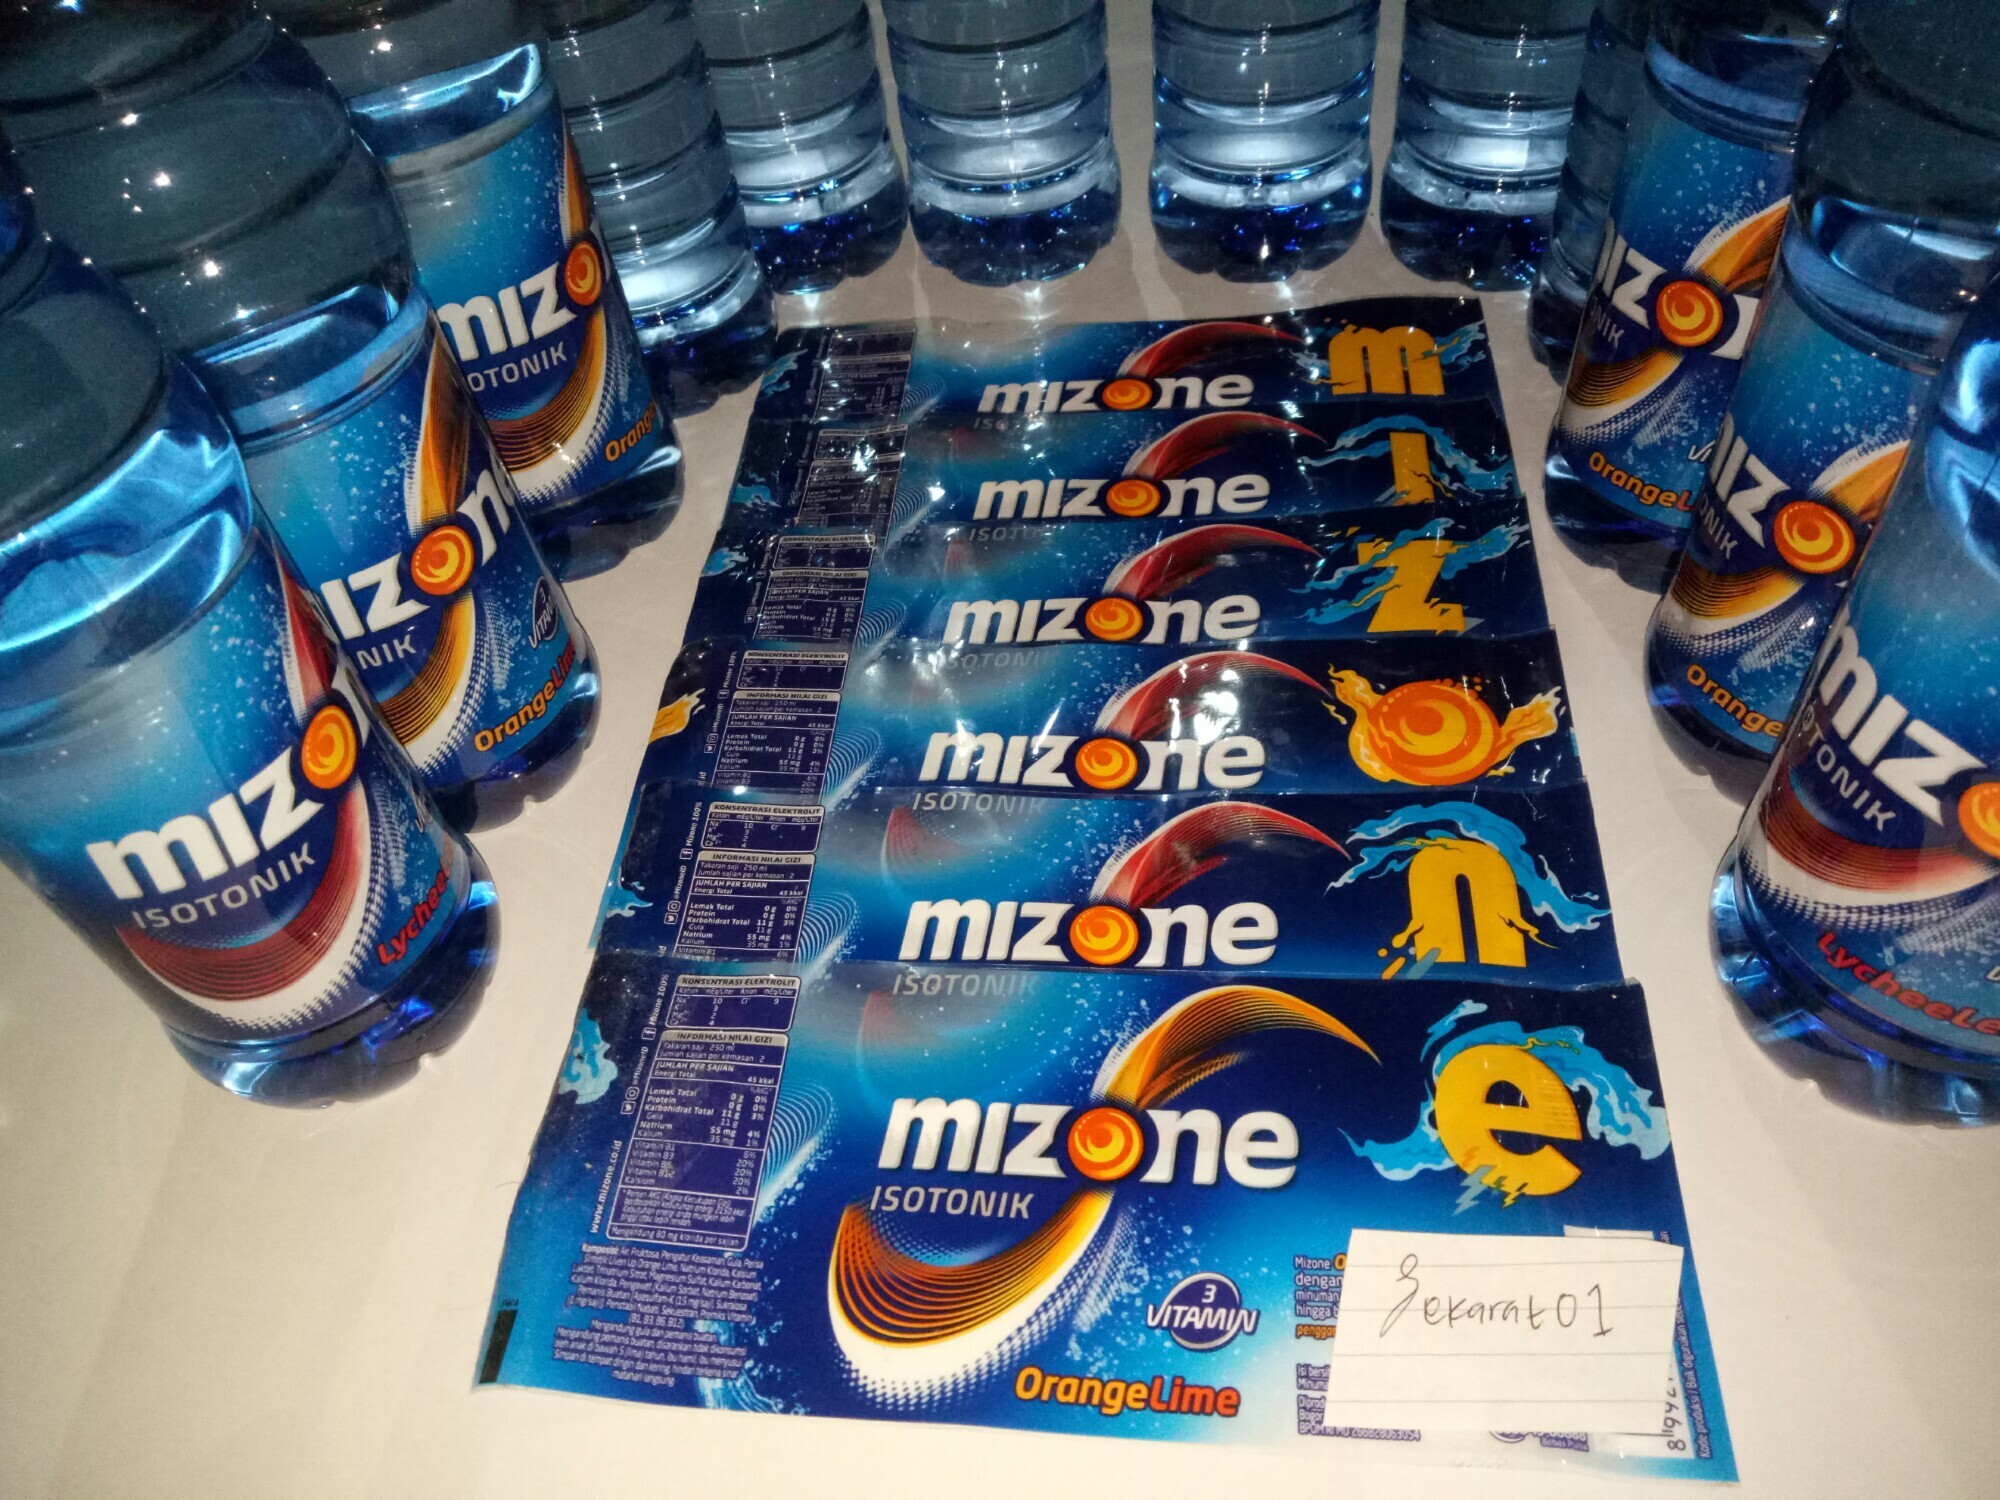 #KASKUSxMizone Ambil Kesegaran dengan Mizone